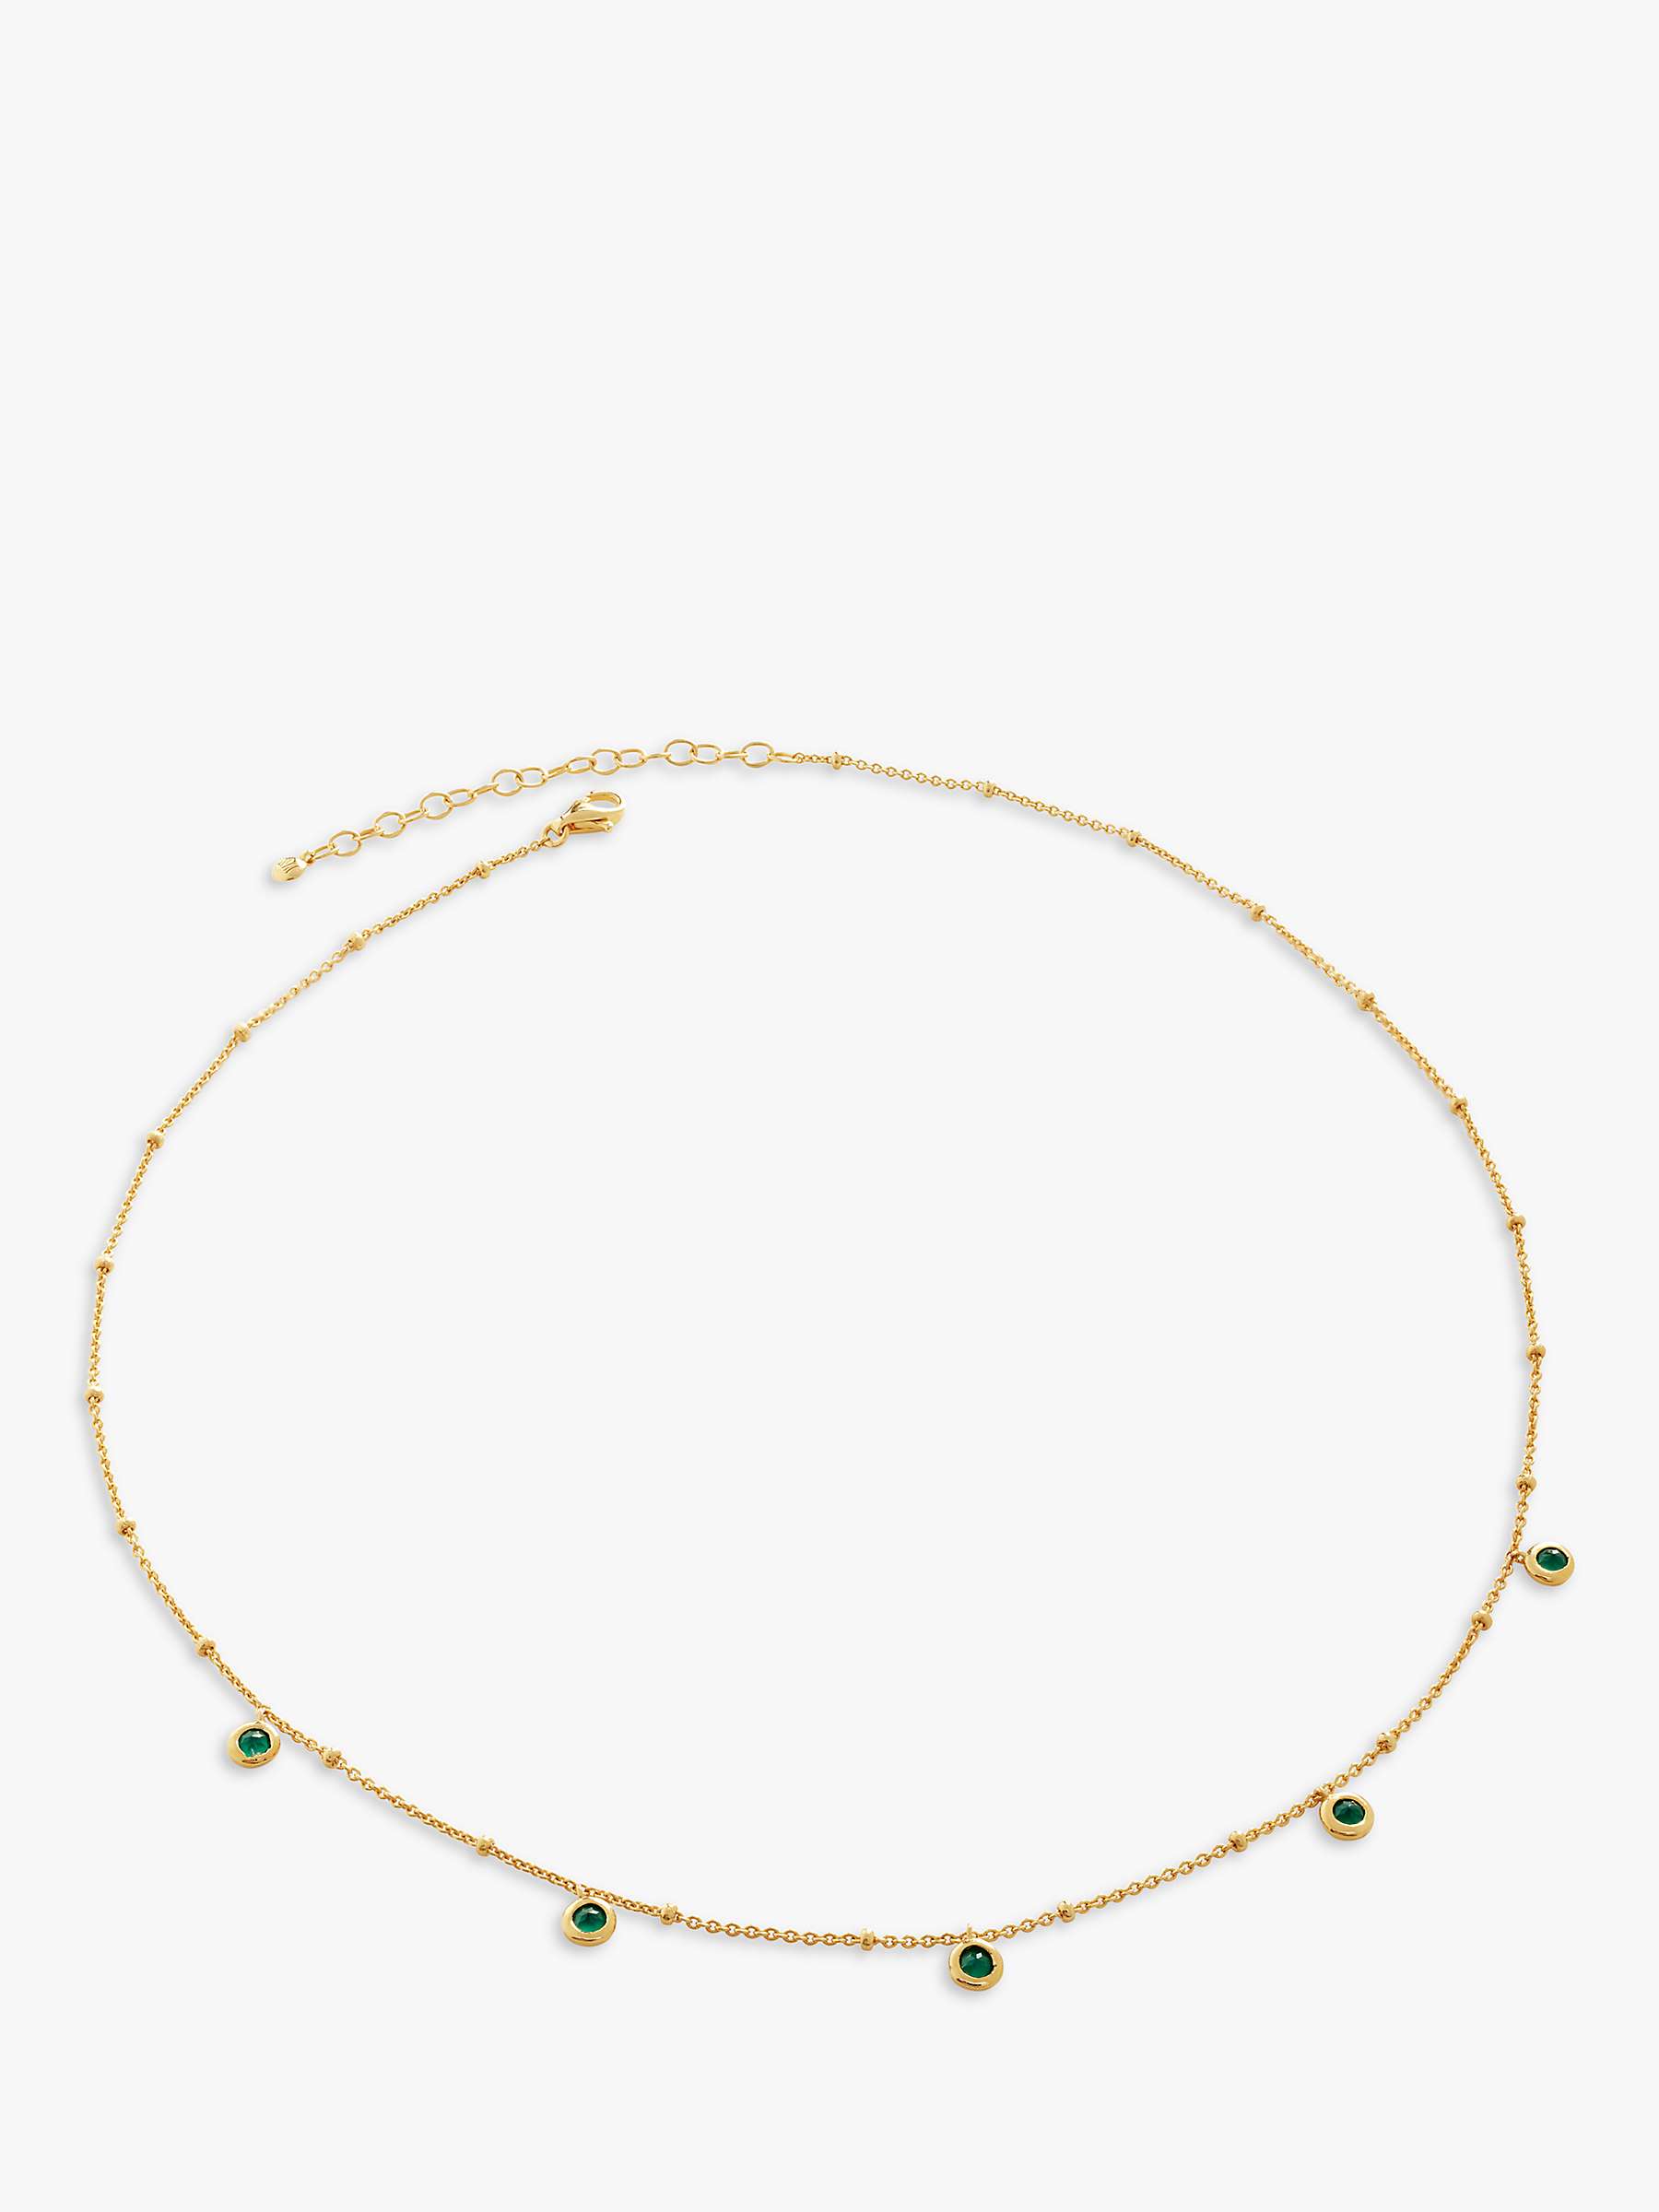 Monica Vinader Onyx Choker Necklace, Gold/Green at John Lewis & Partners